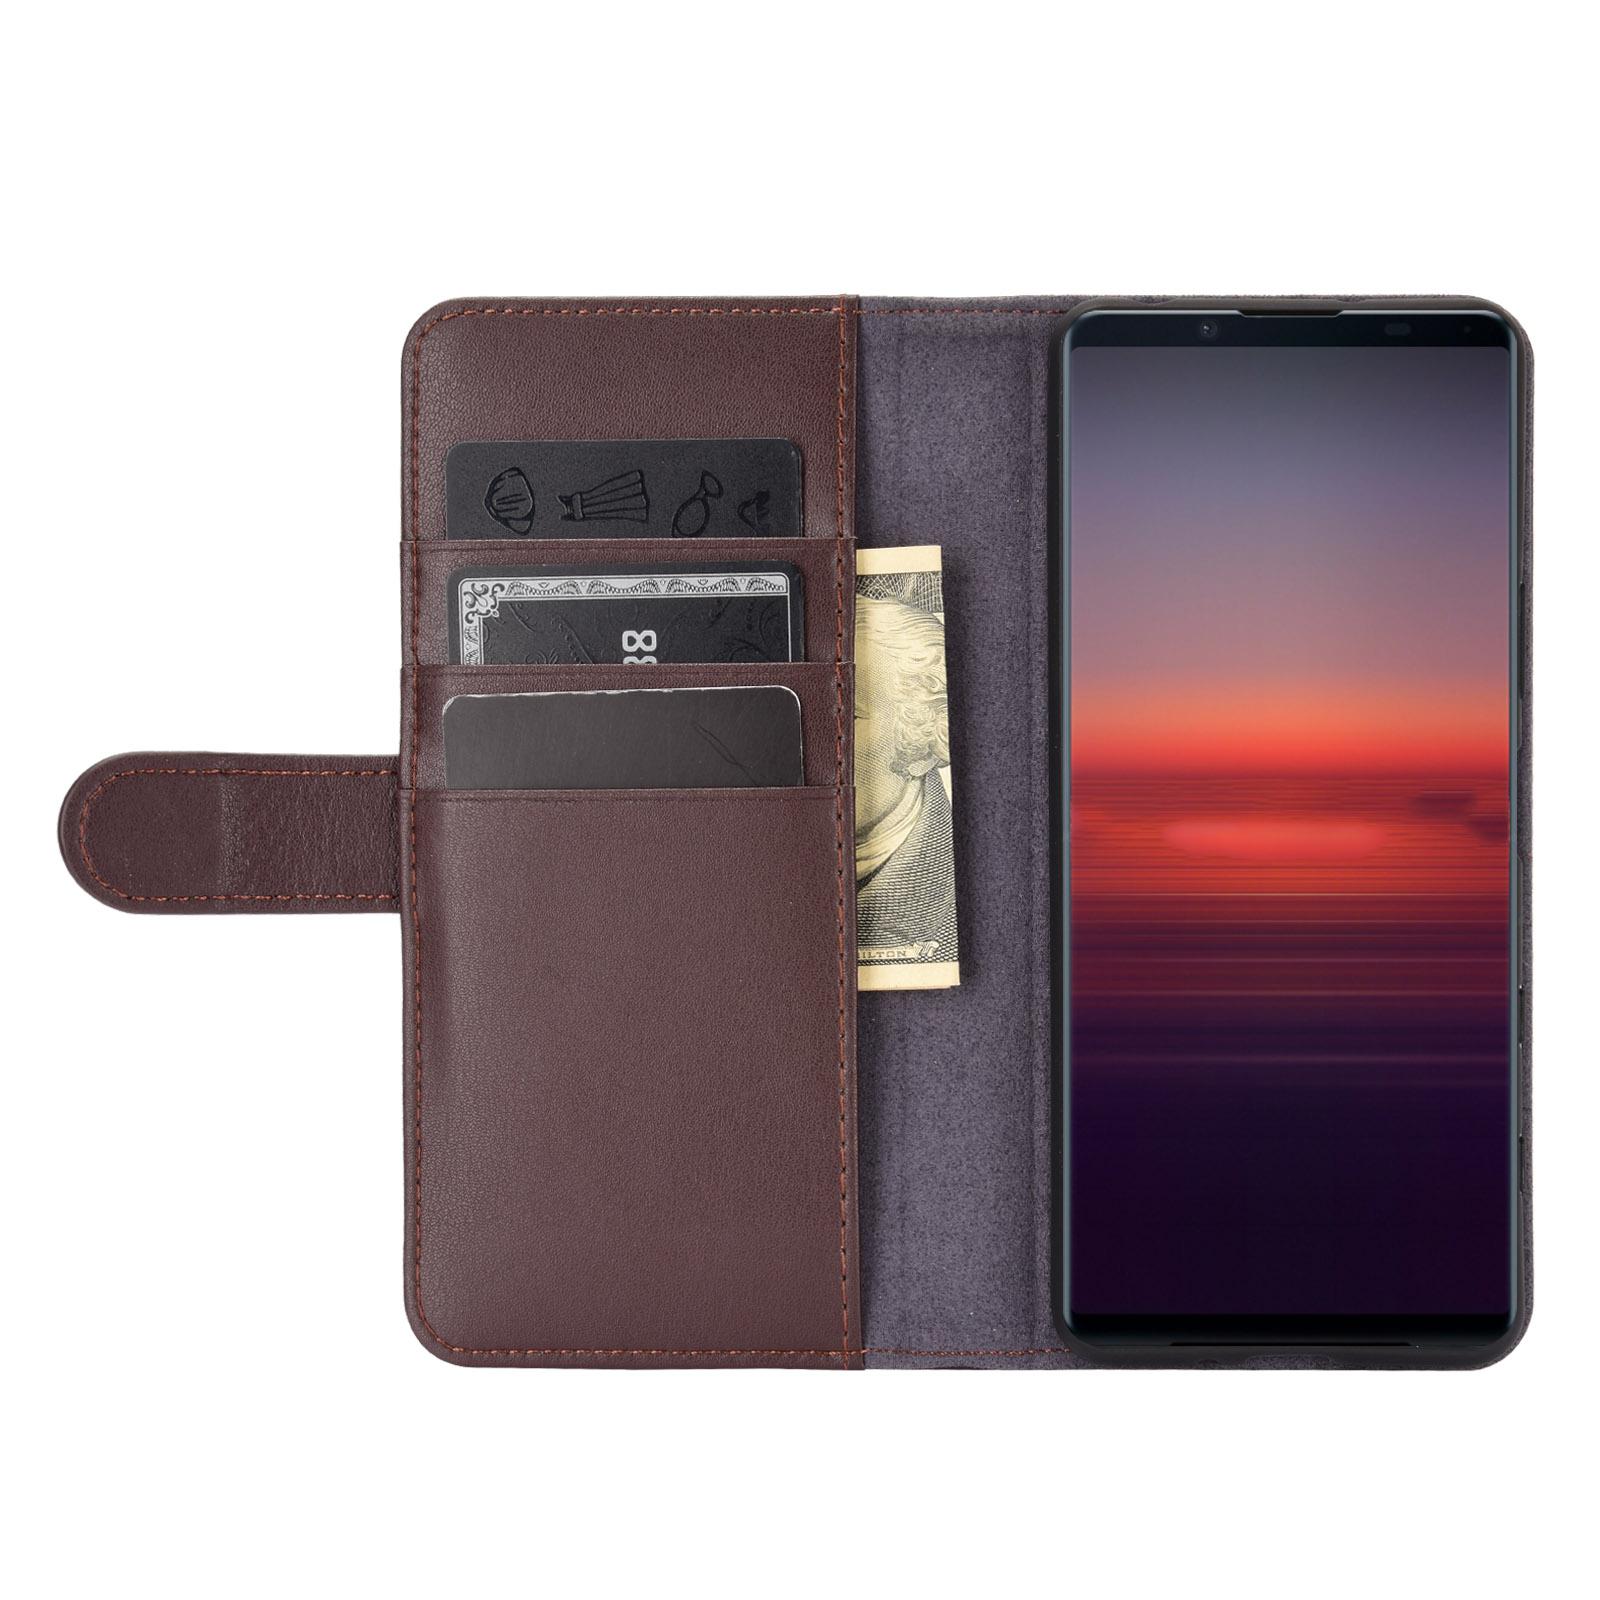 Sony Xperia 5 II Plånboksfodral i Äkta Läder, brun